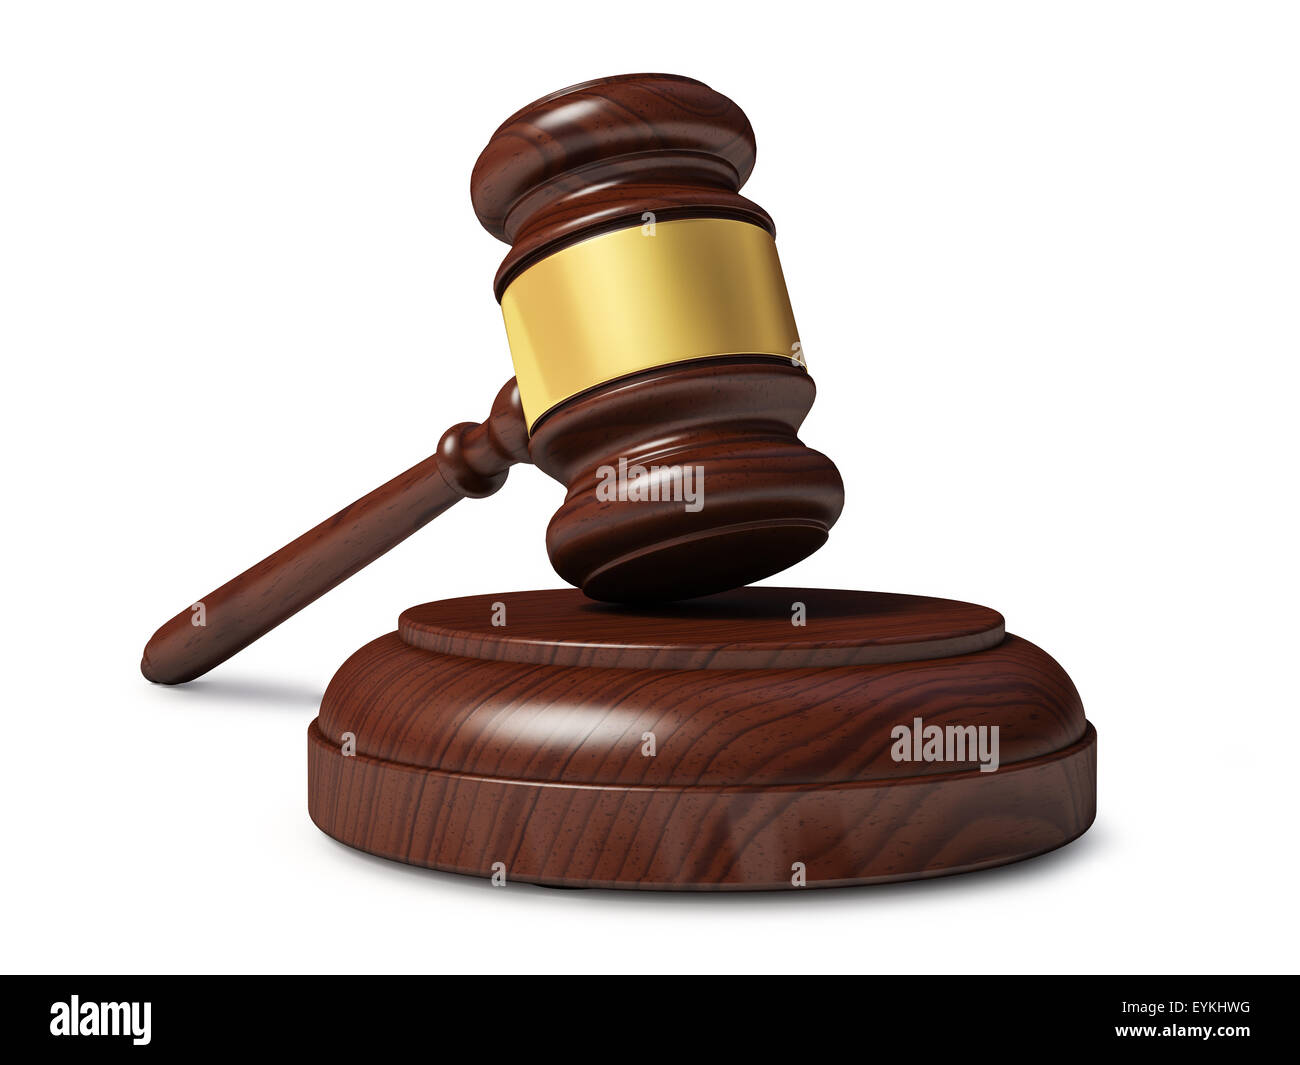 Wooden judge gavel isolated on white background Stock Photo